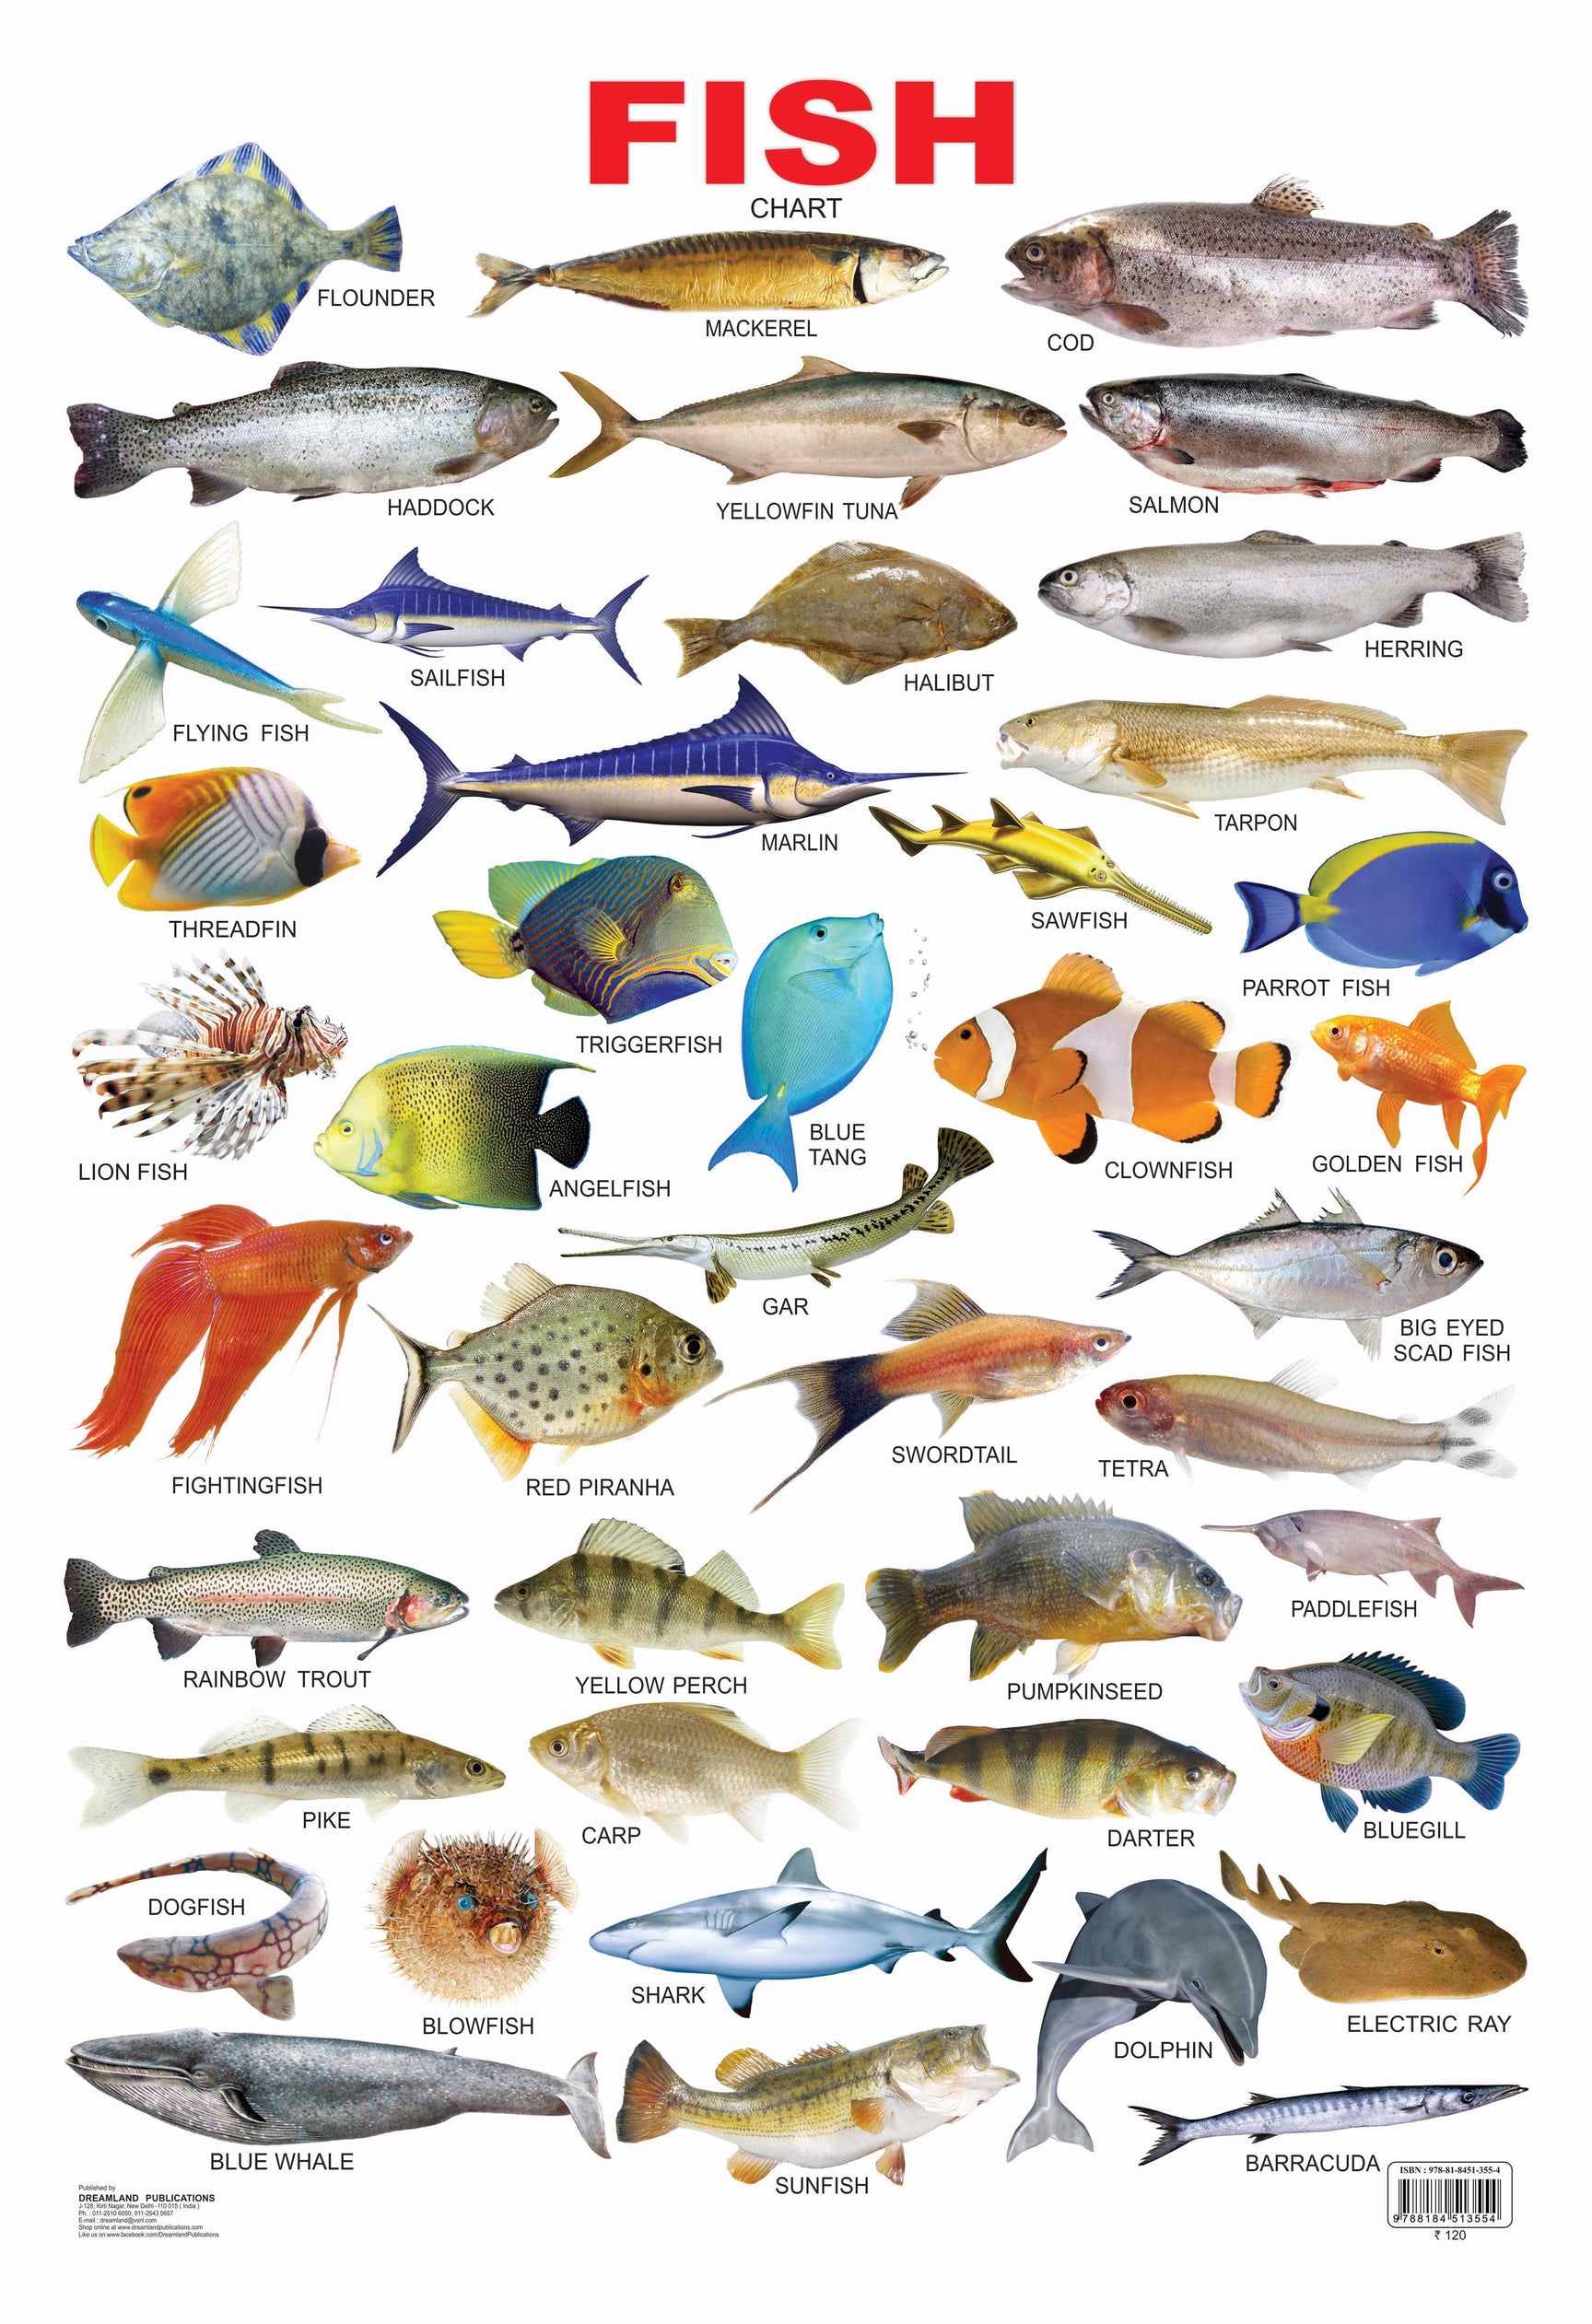 Word of fish. Морские рыбы. Названия рыб на англ. Разновидности рыб. Морские рыбы для детей.